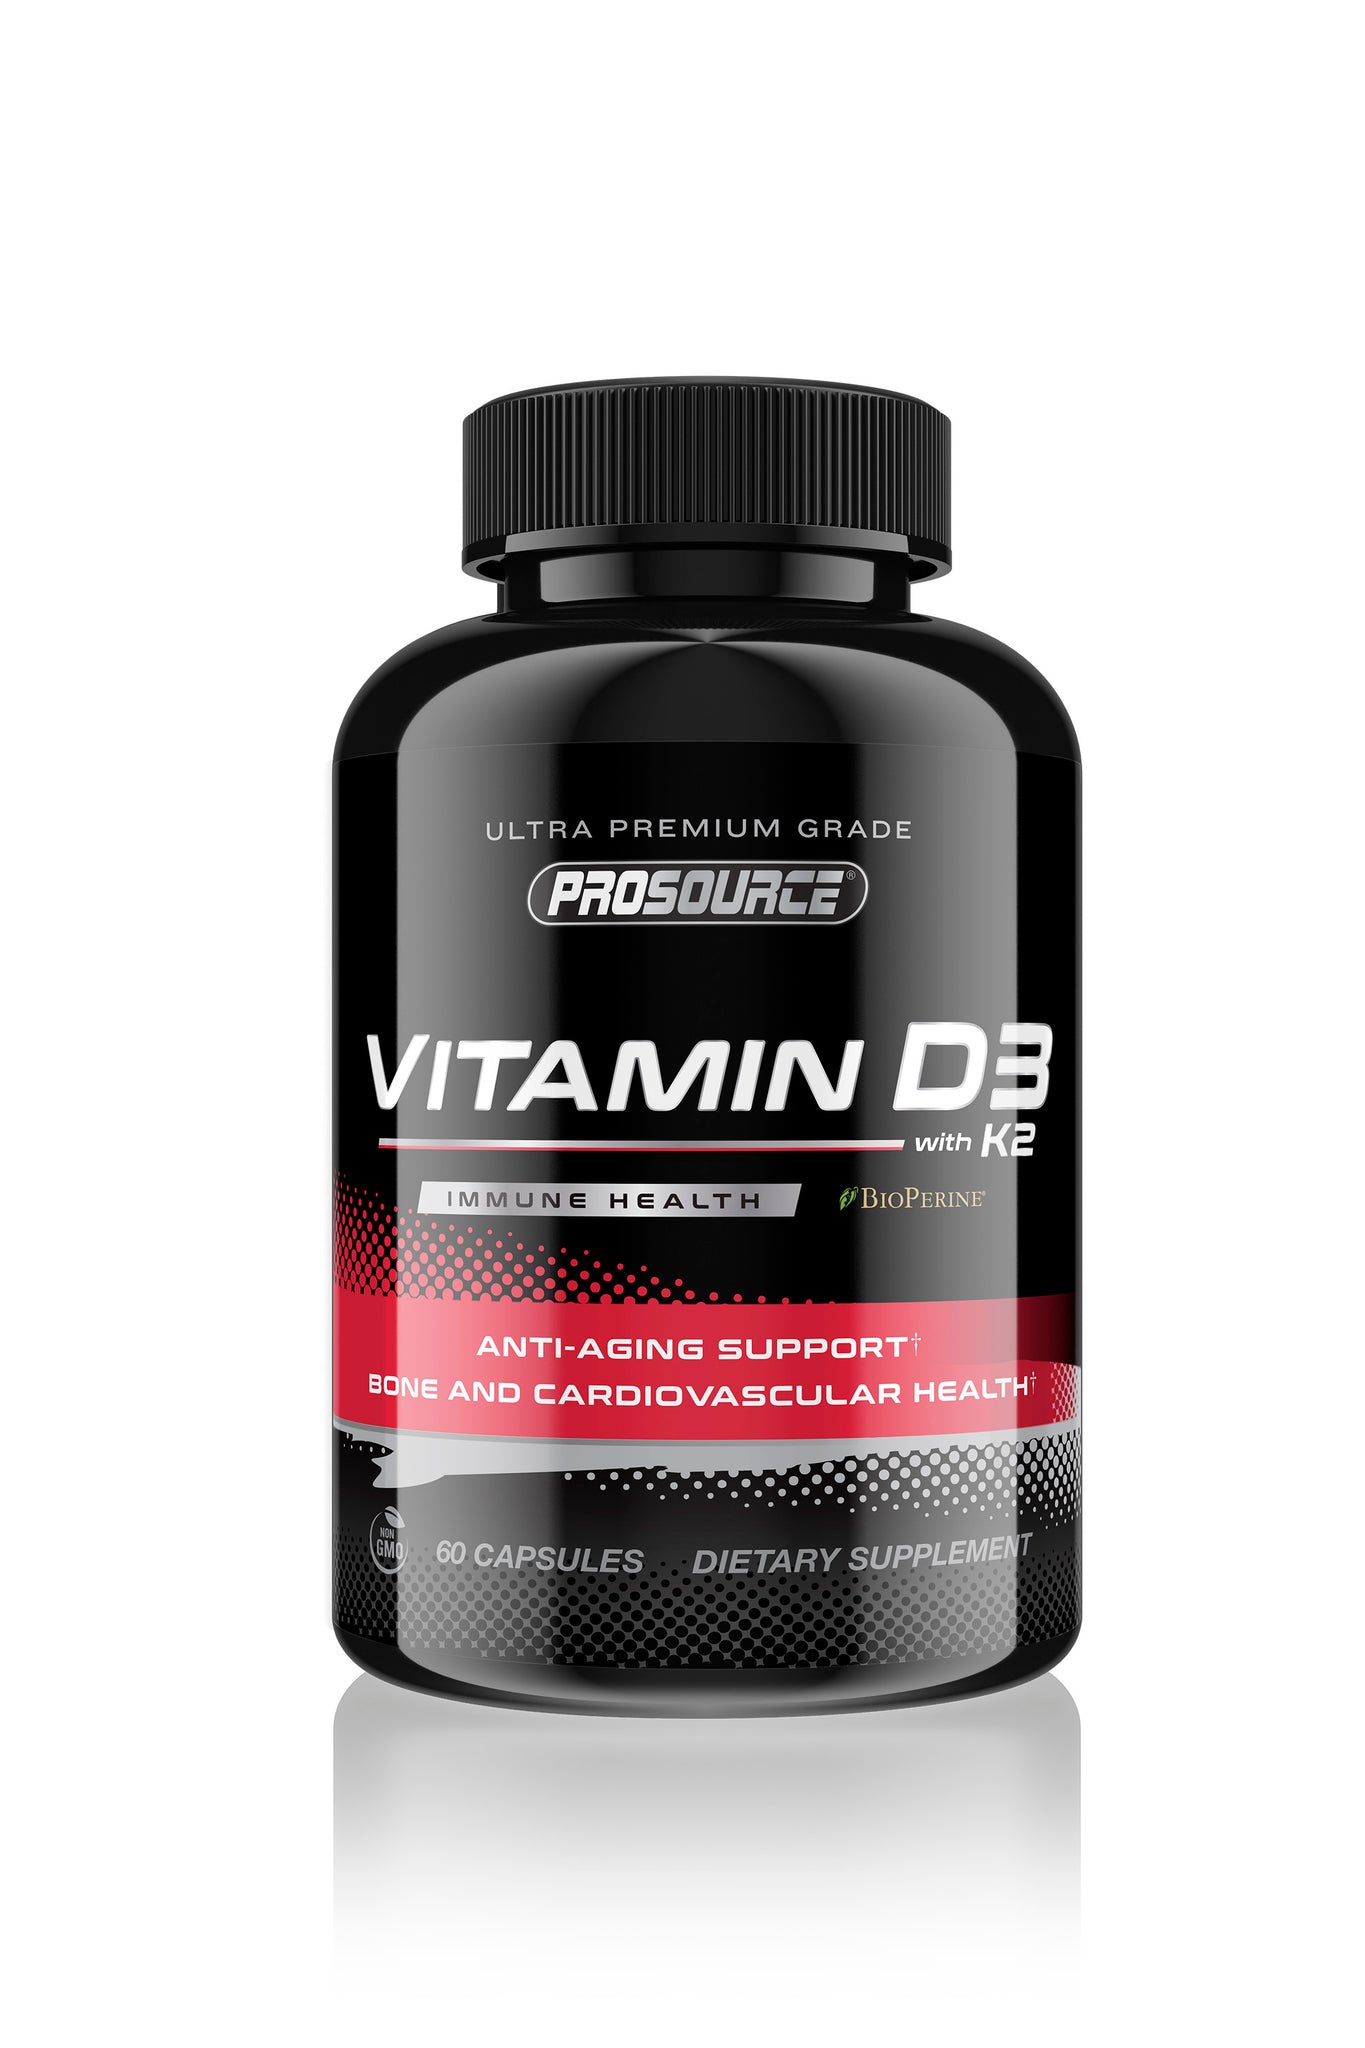 vitamin d3 with k2 immune health bioperine anti aging support bone and cardiovascular health 60 capsules